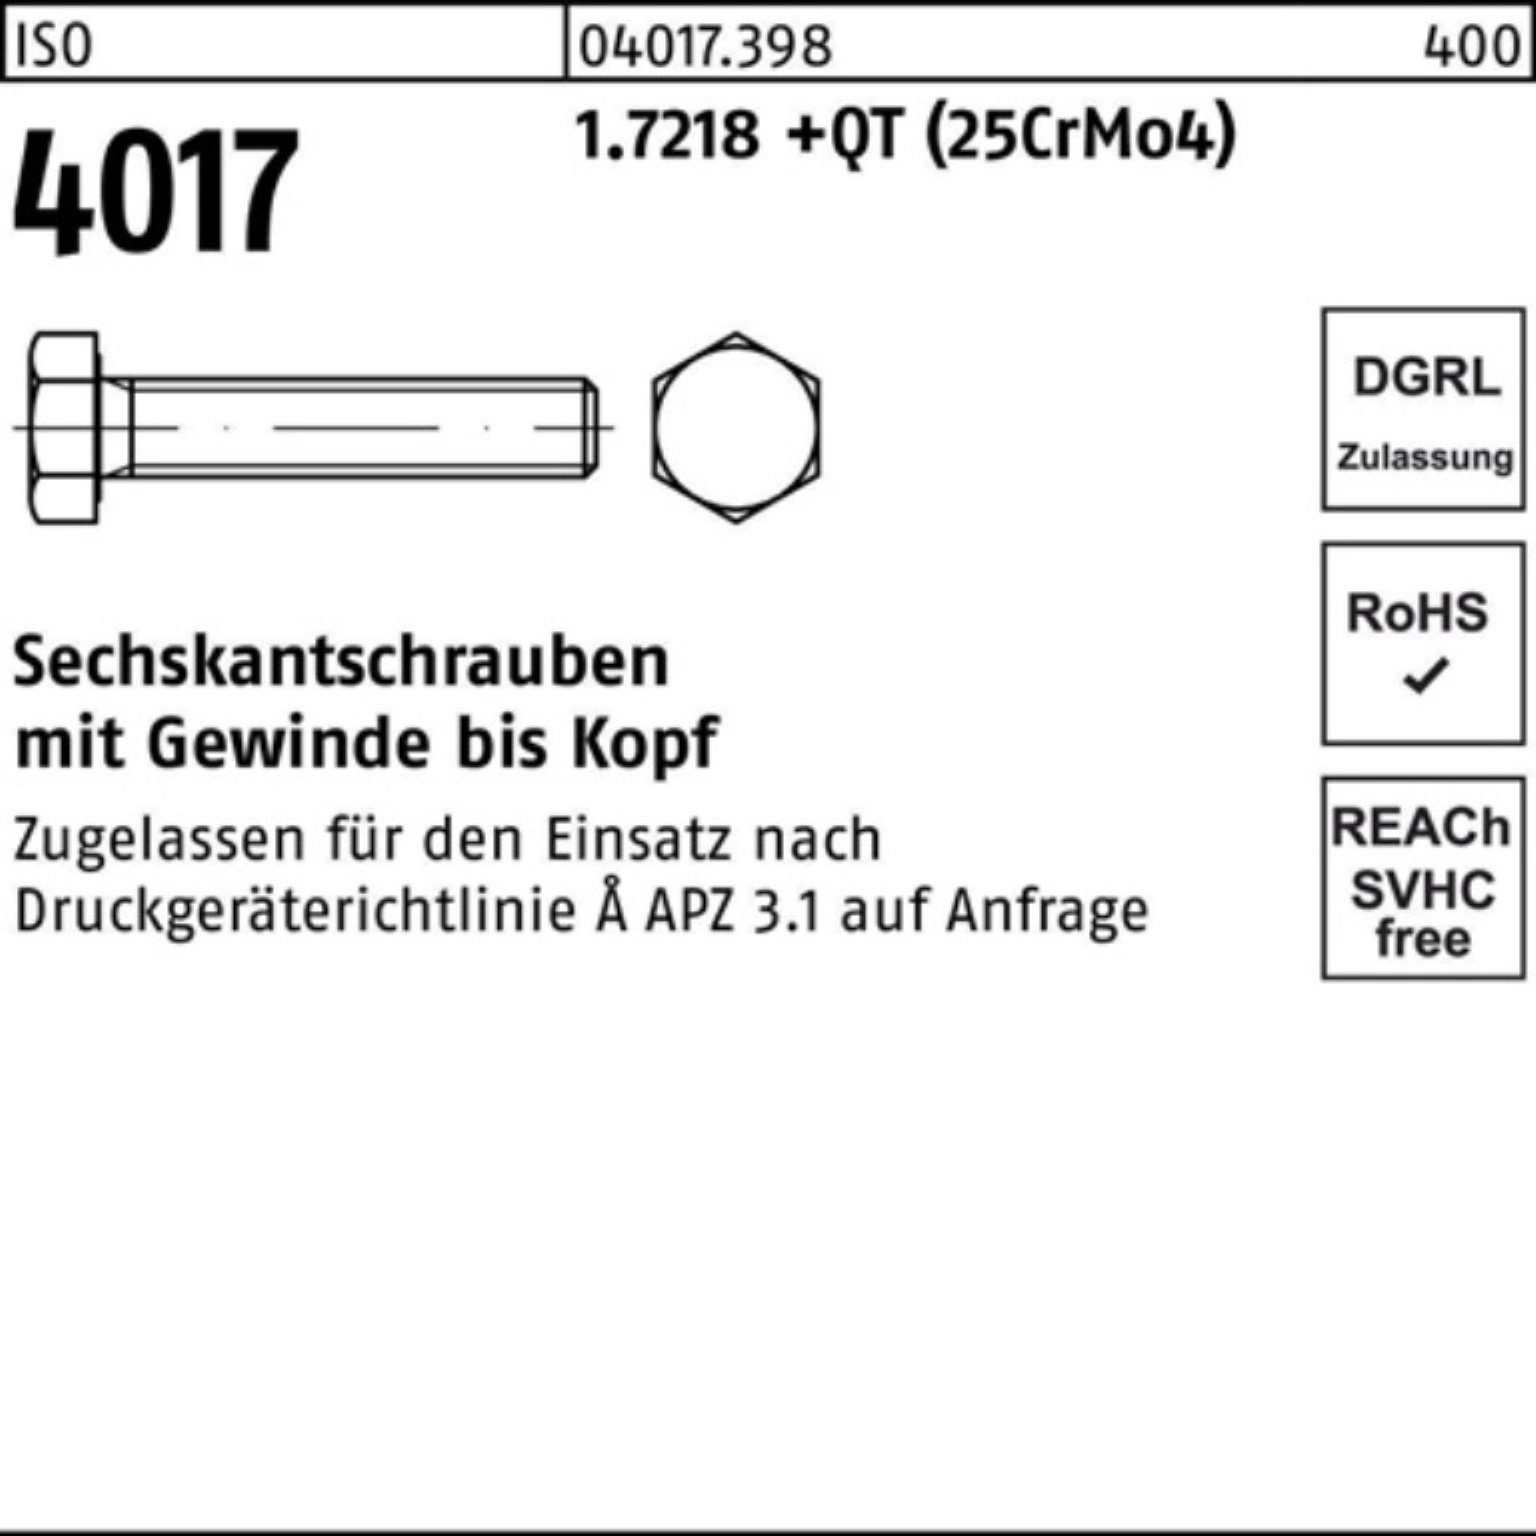 Bufab Sechskantschraube 100er Pack Sechskantschraube (25CrMo4) ISO VG 4017 M24x 180 +QT 1.7218